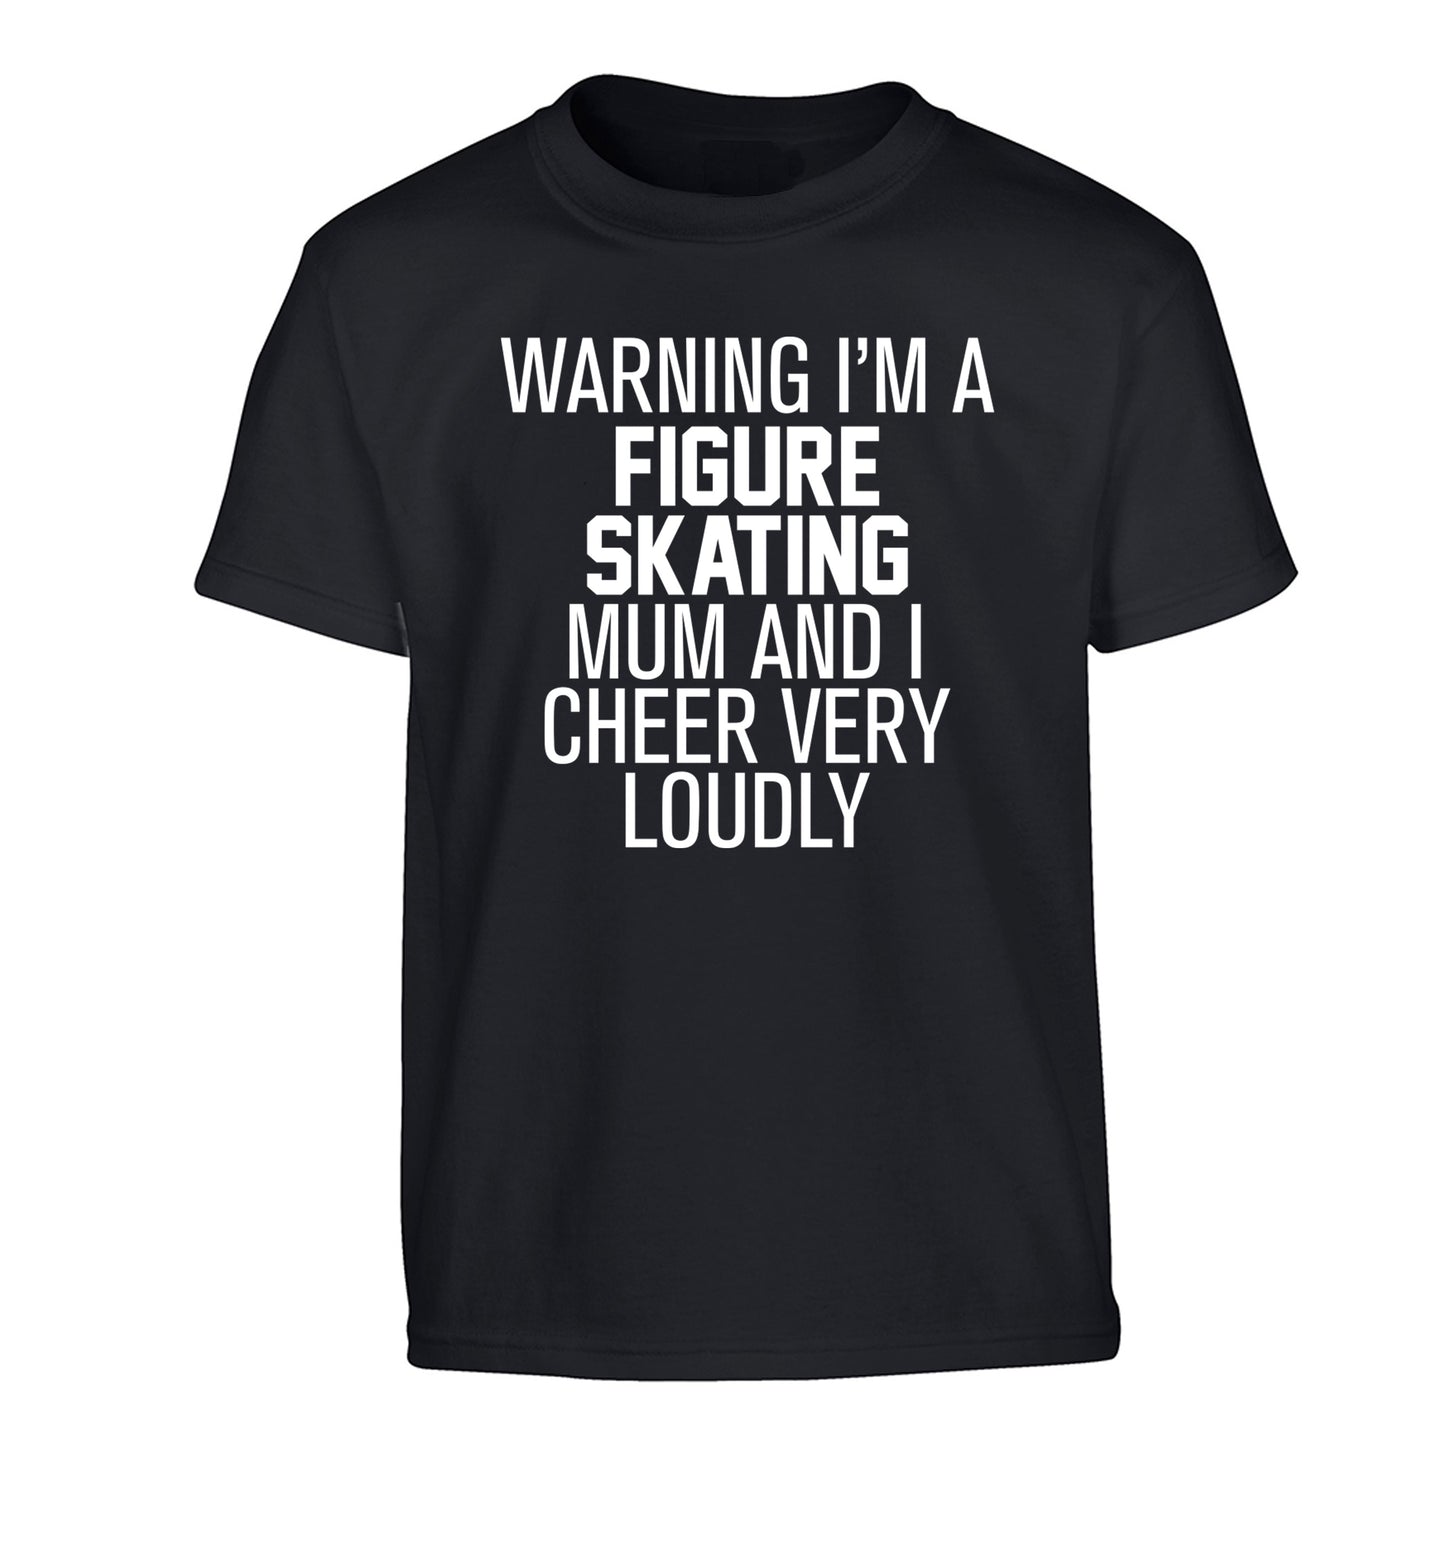 Warning I'm a figure skating mum and I cheer very loudly Children's black Tshirt 12-14 Years